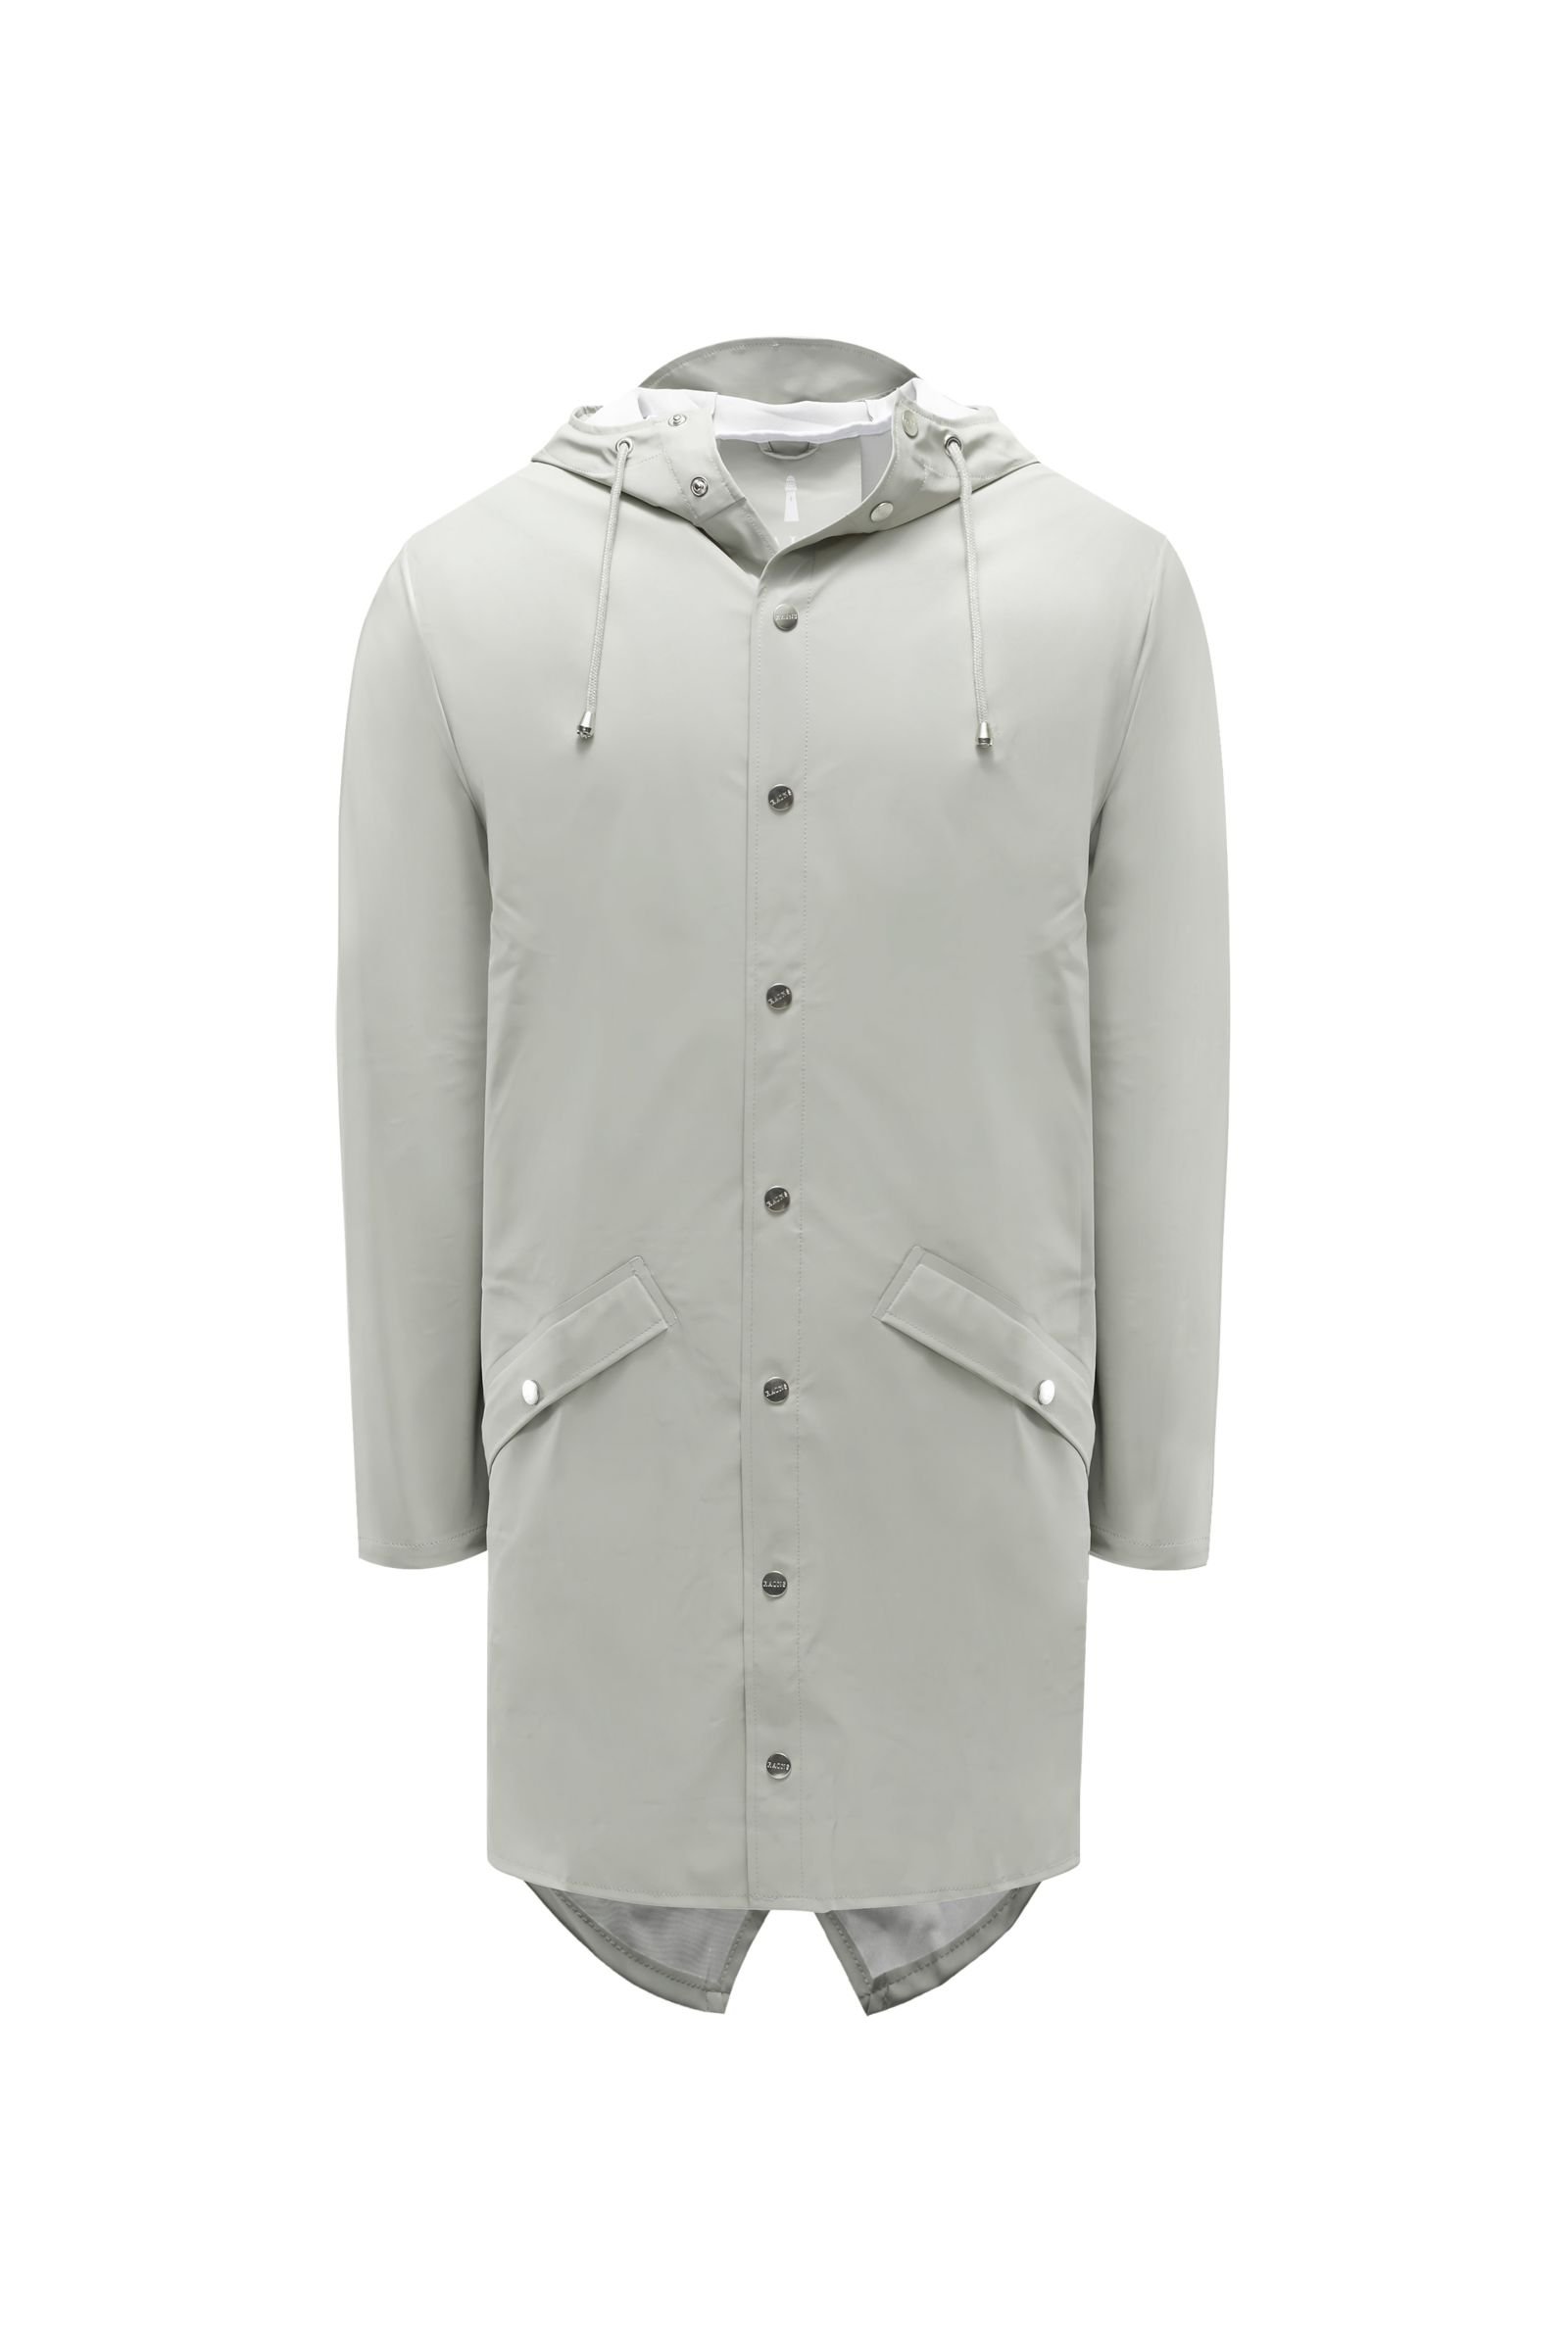 Rain coat 'Long Jacket' beige